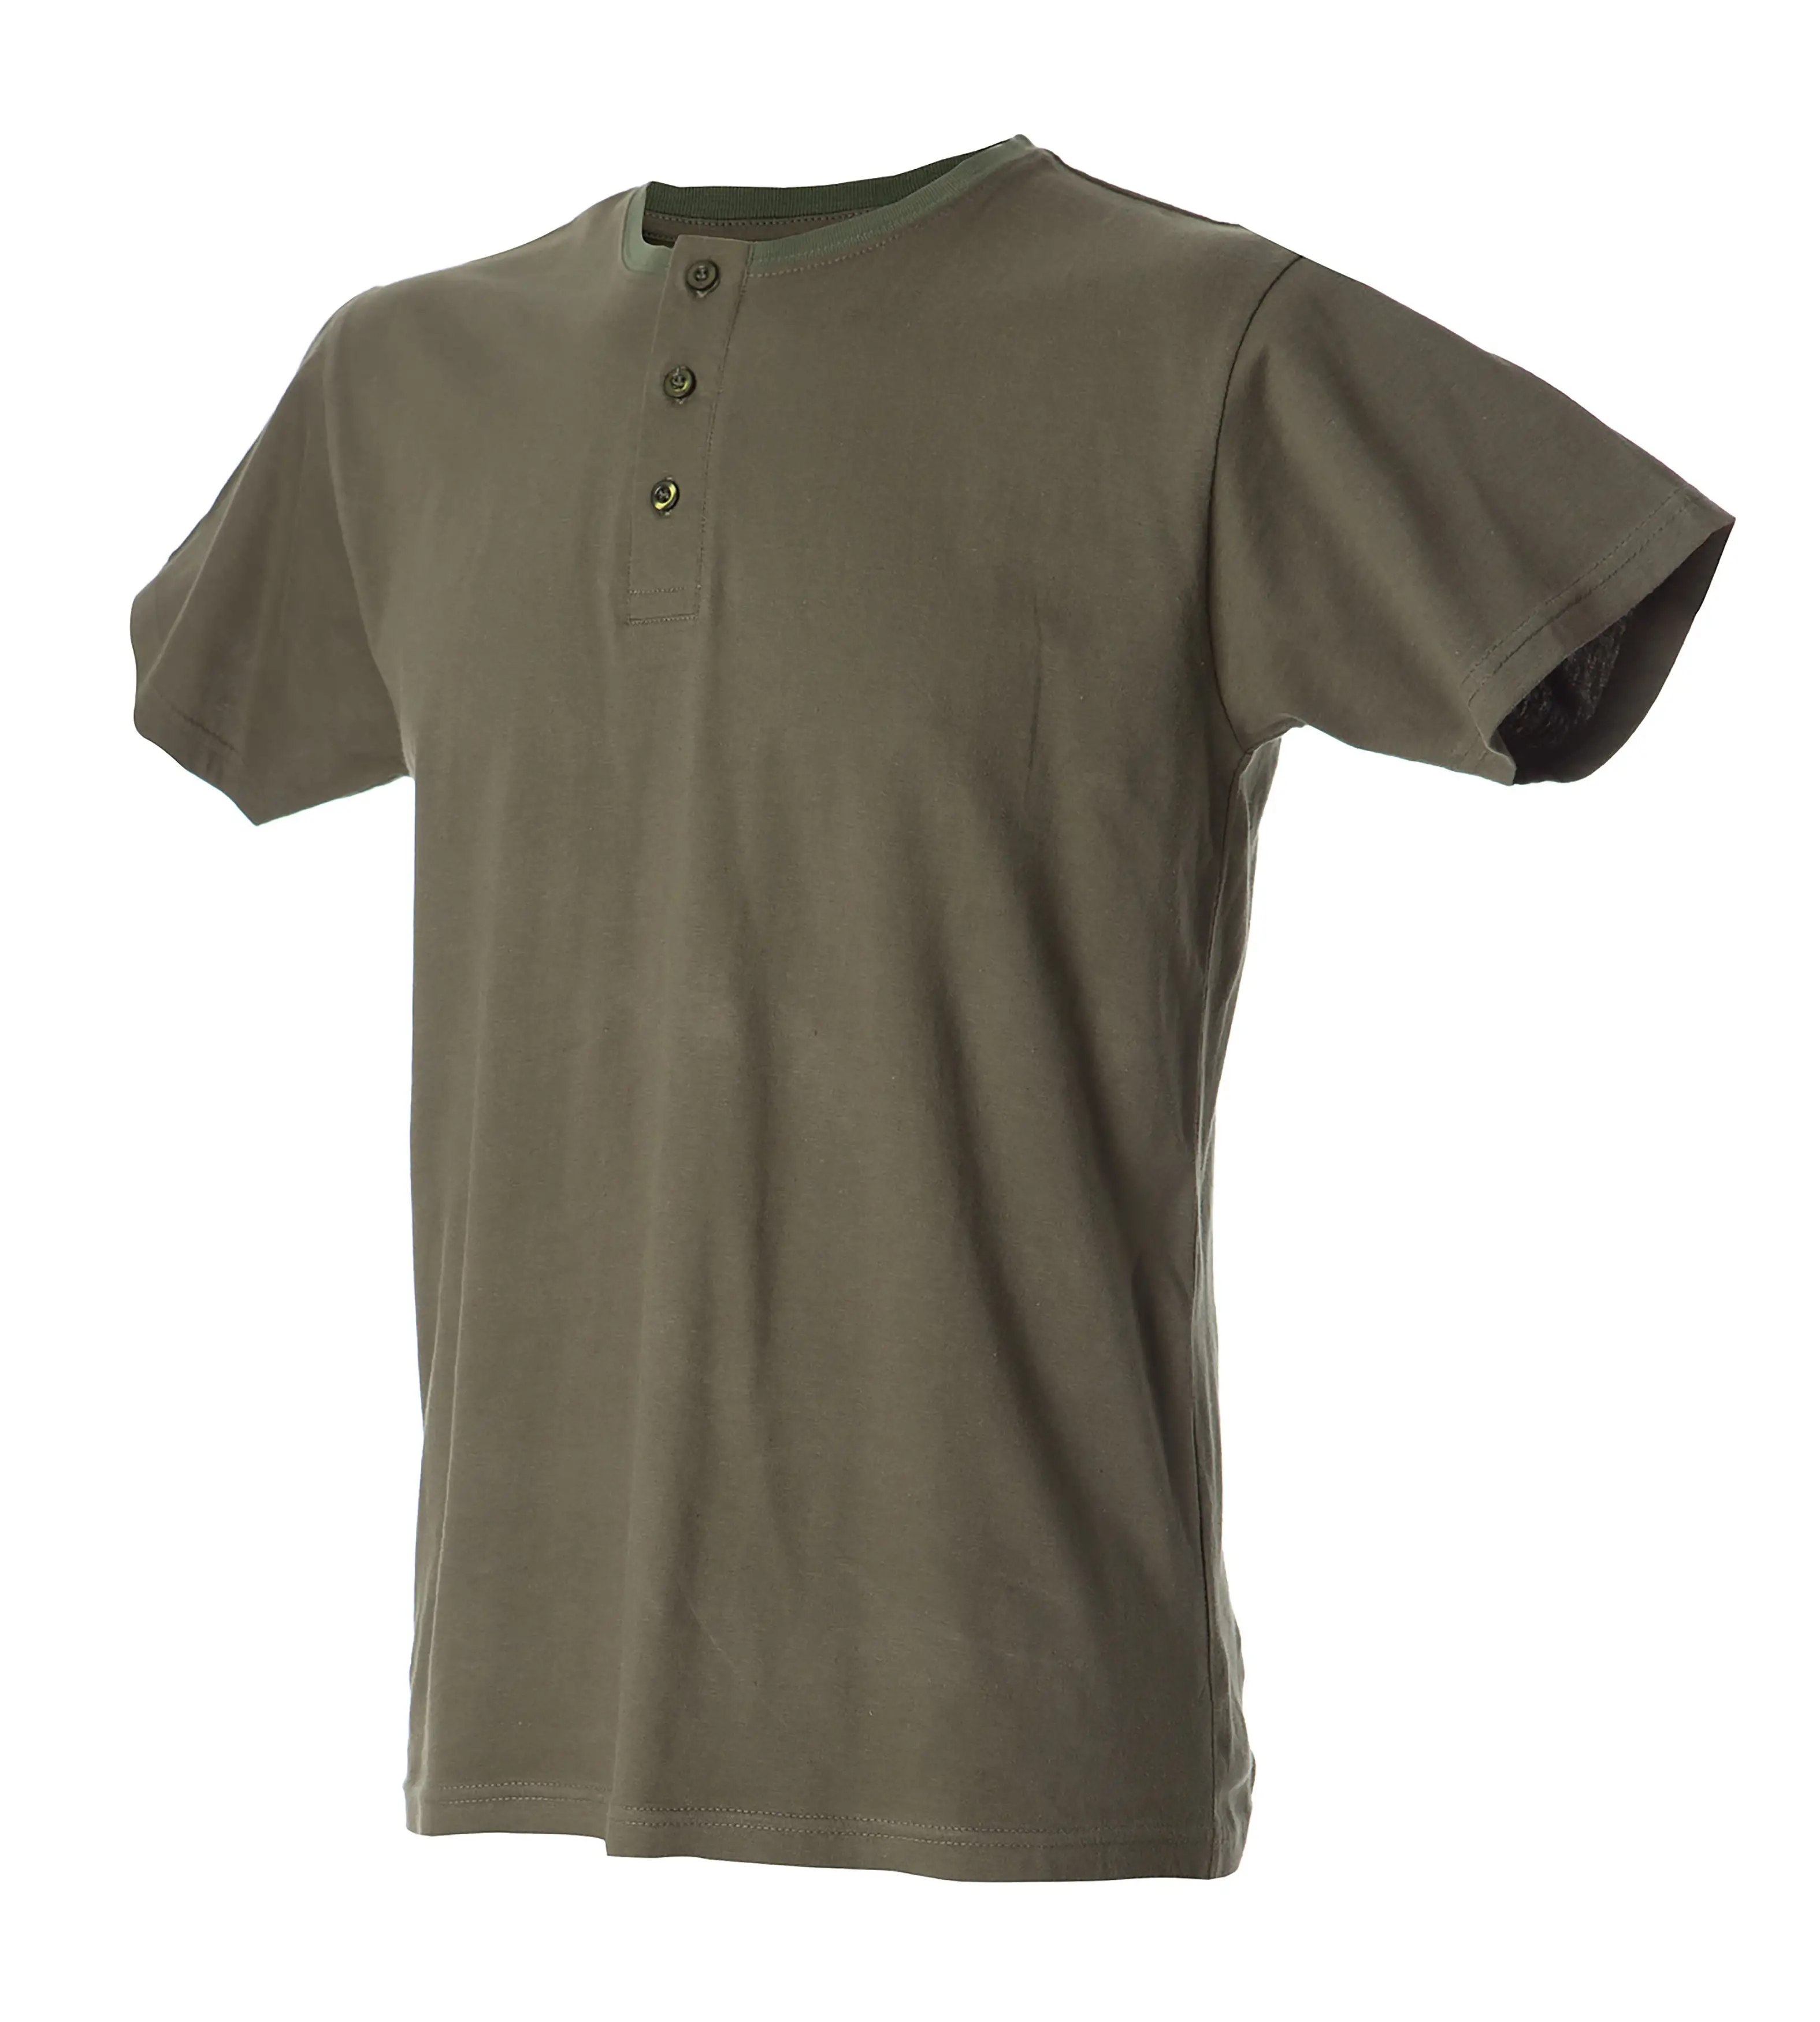 T-shirt malaga - army green - s